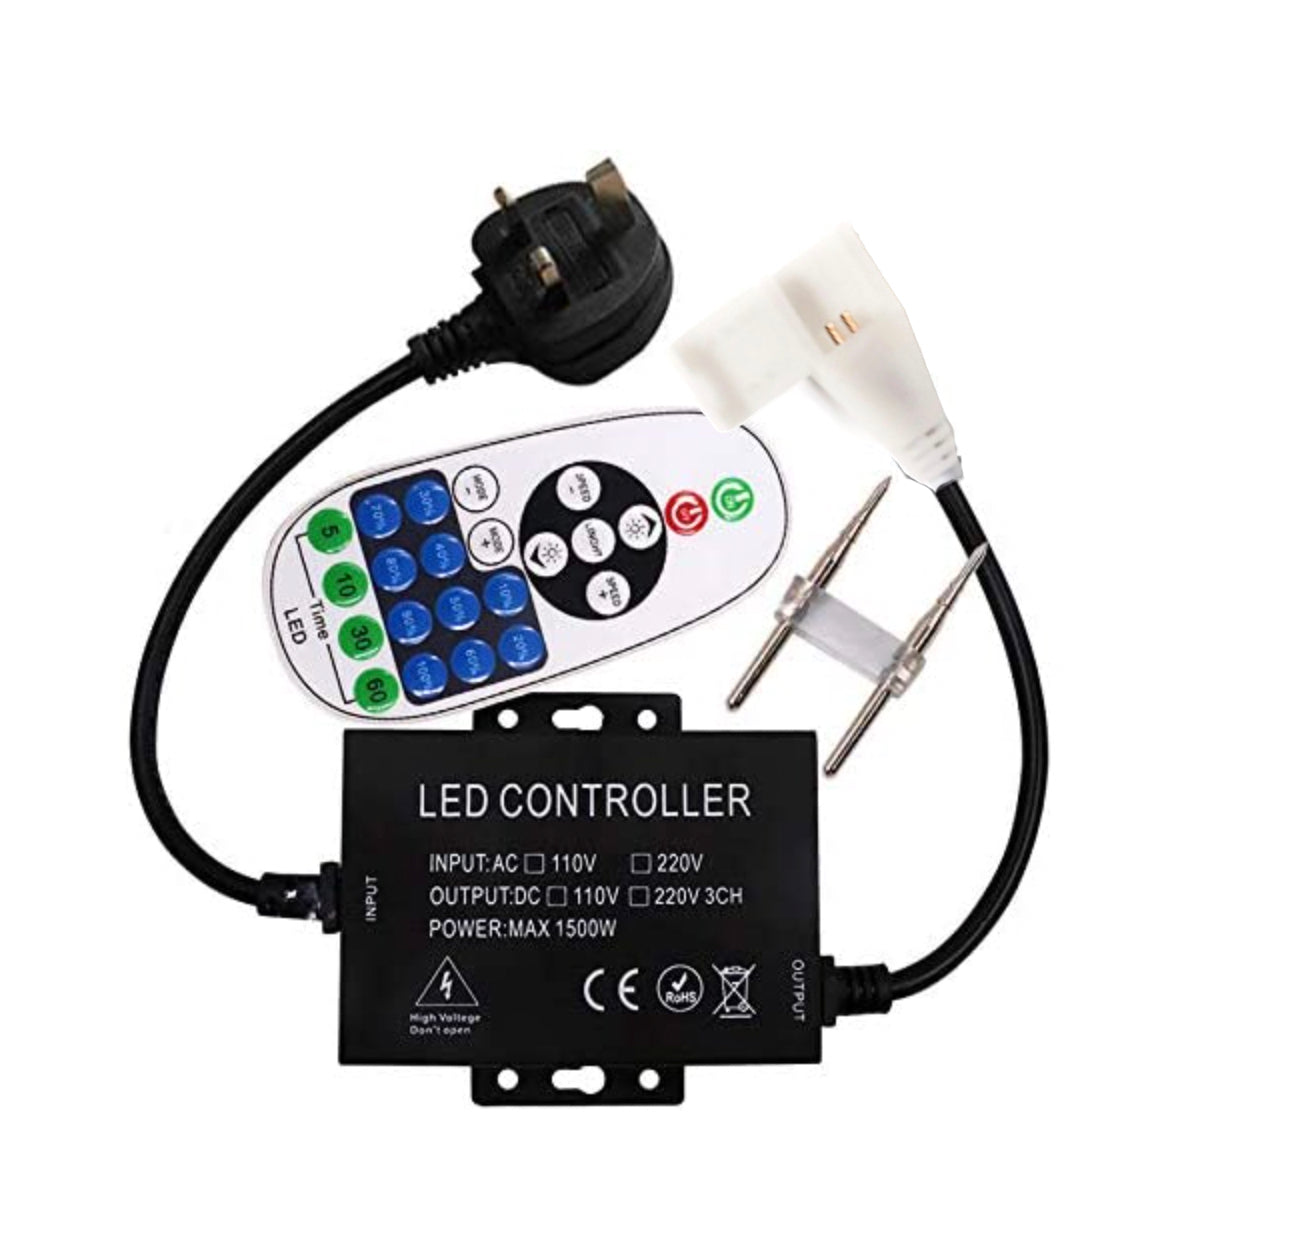 Dimmable COB LED Neon Strip Light 220V Dimmer Switch Power Kit